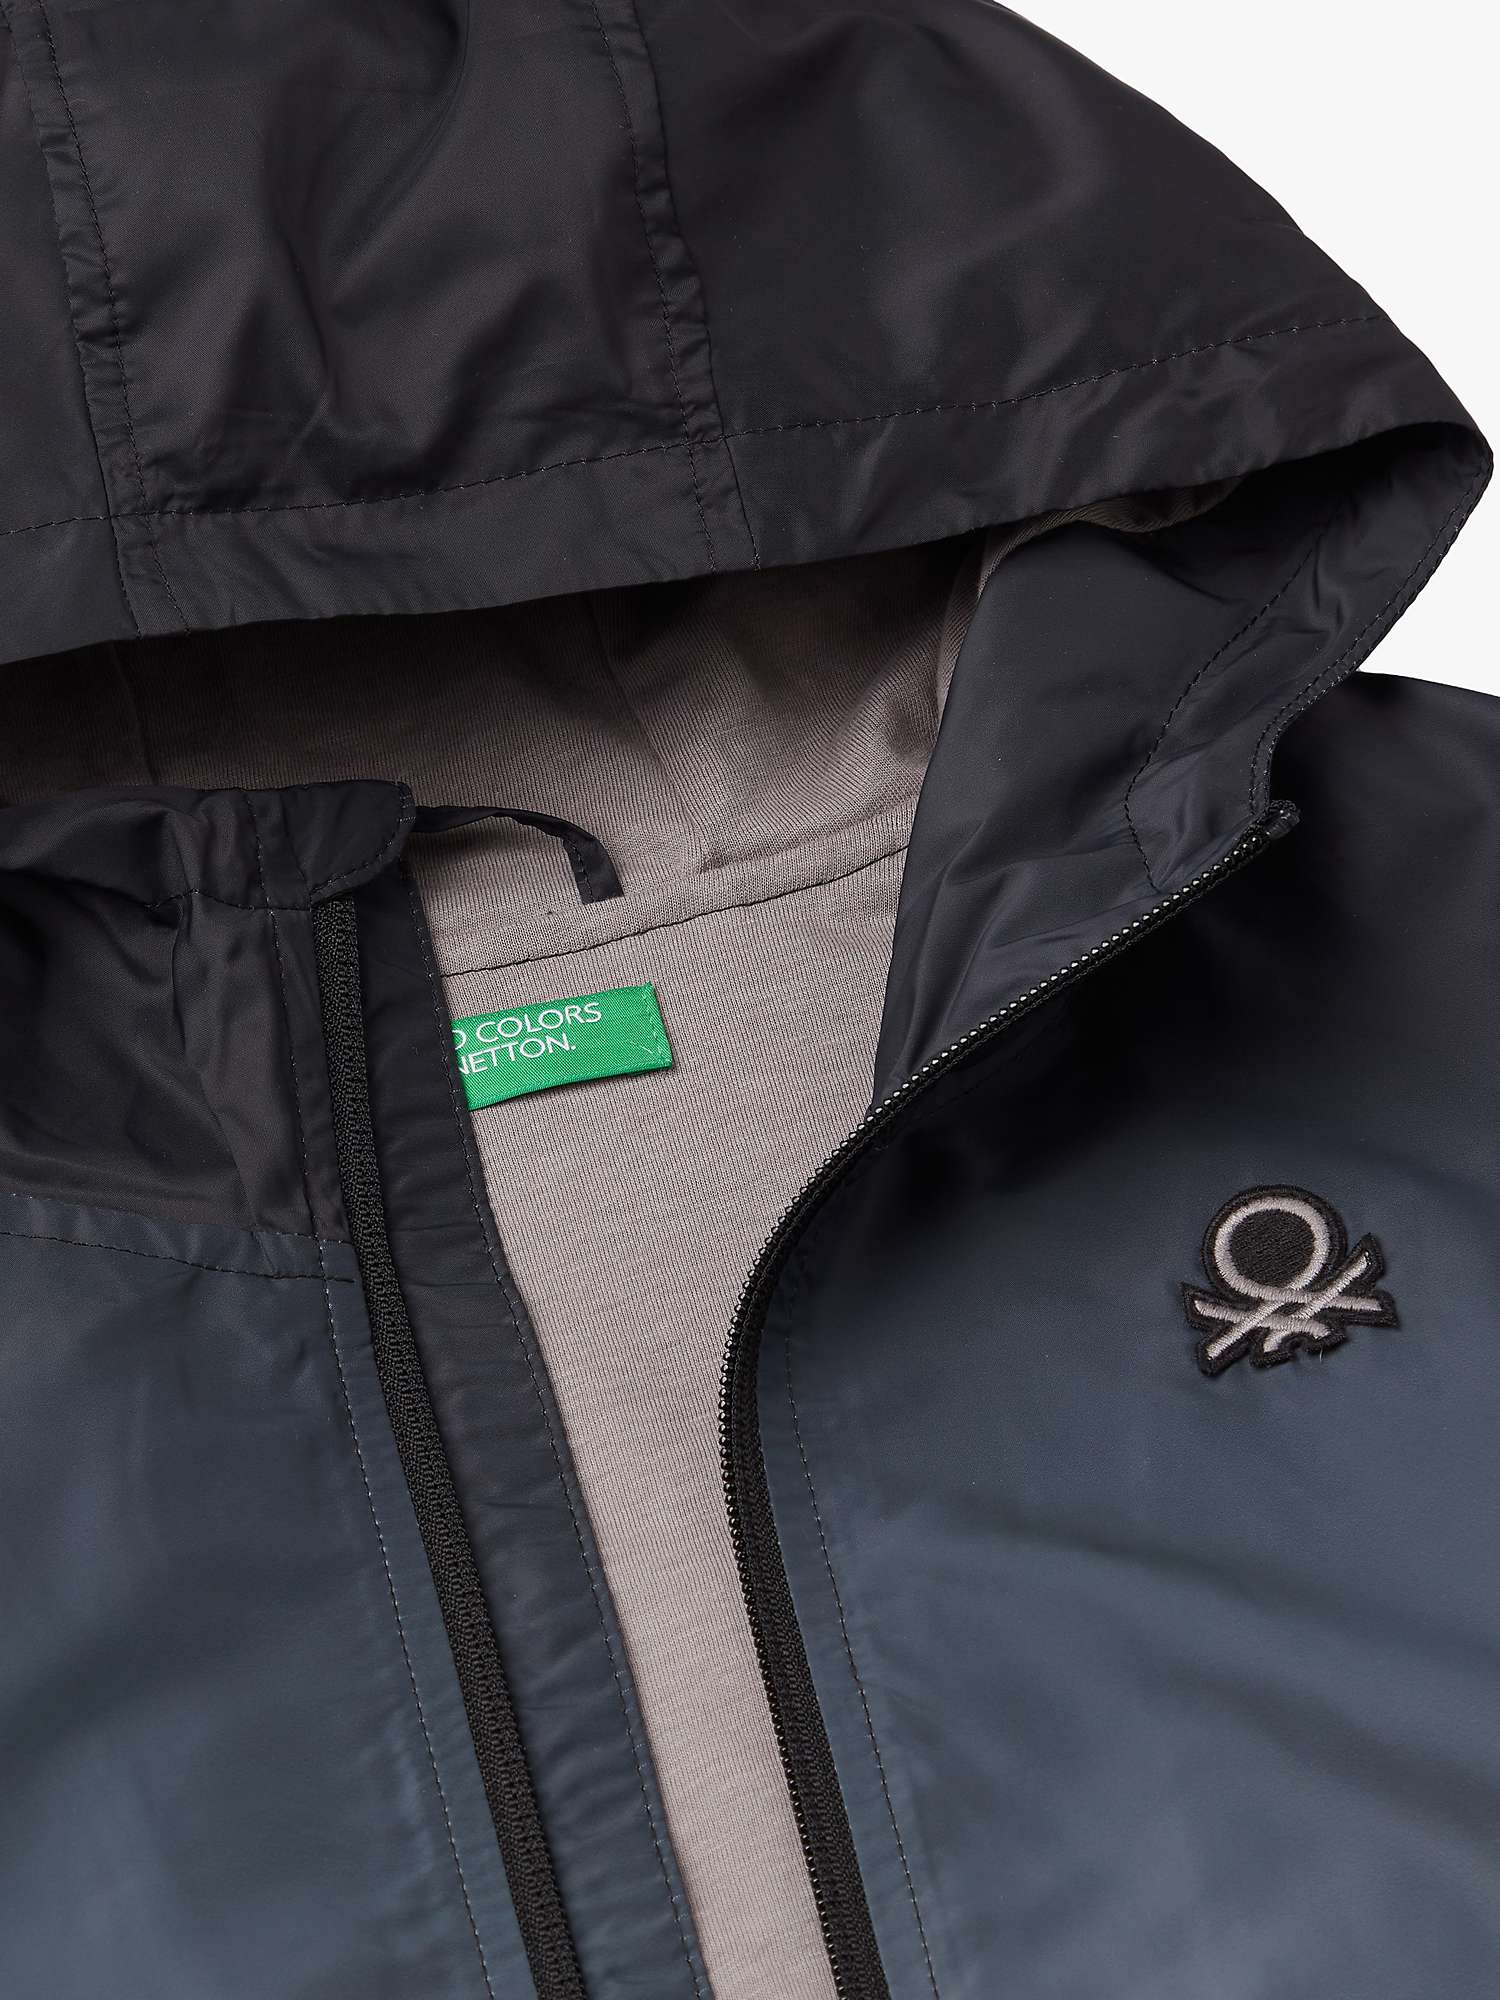 Buy Benetton Kids' Rain Defender Hooded Sports Jacket, Black Online at johnlewis.com